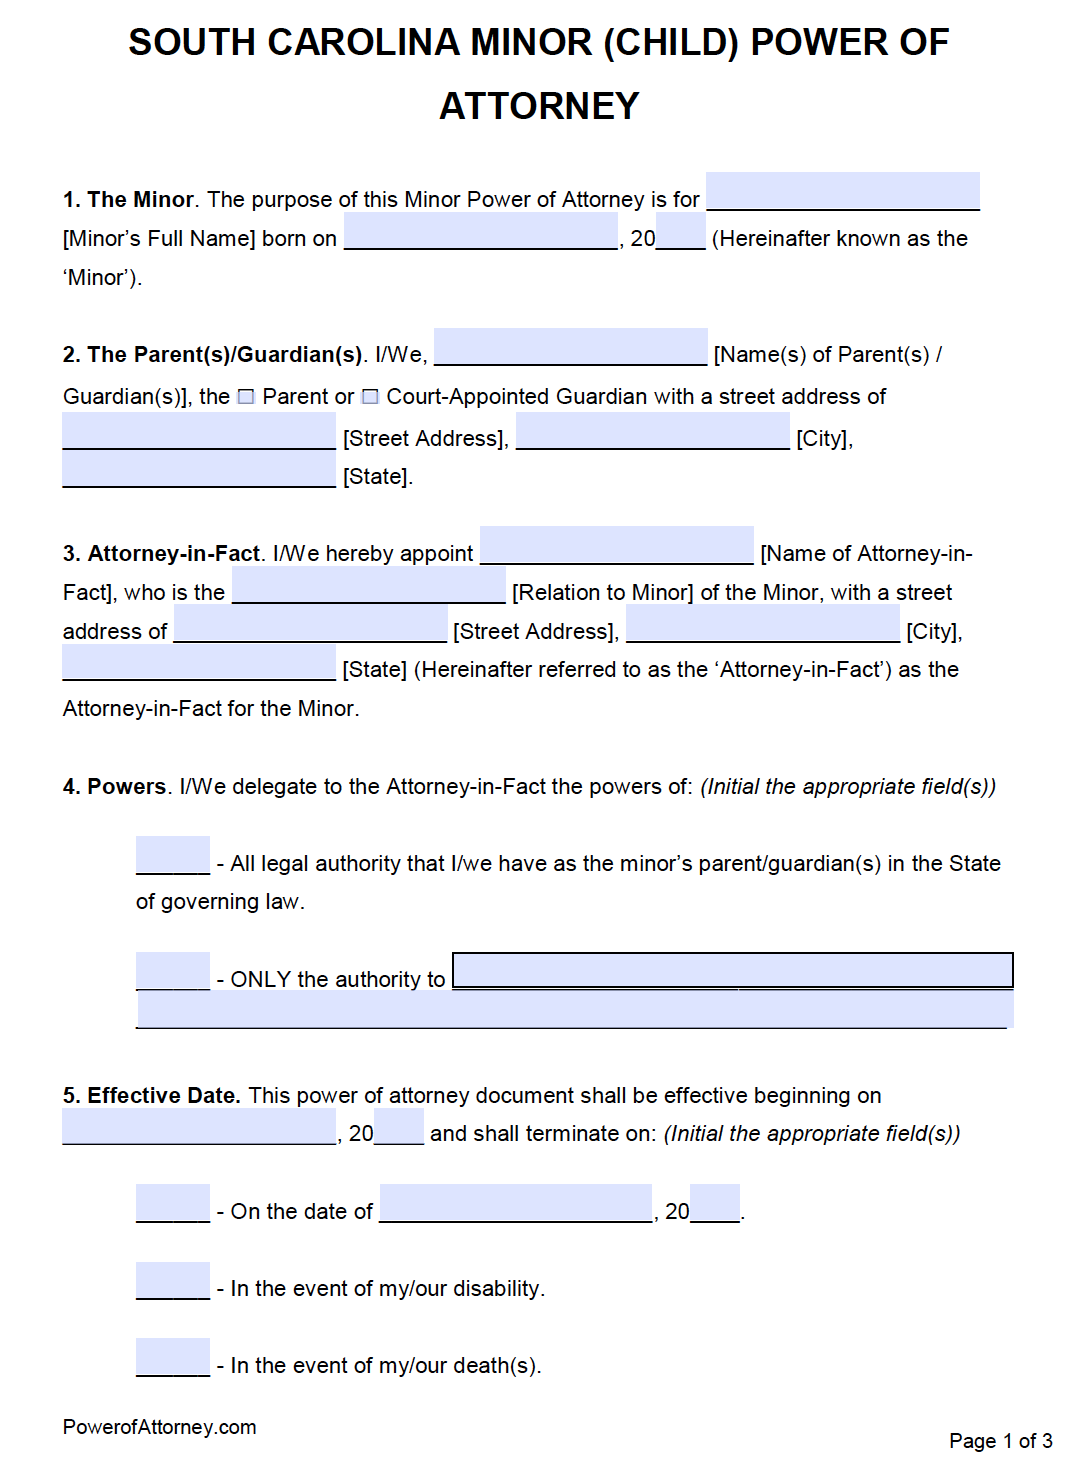 free south carolina power of attorney forms pdf templates